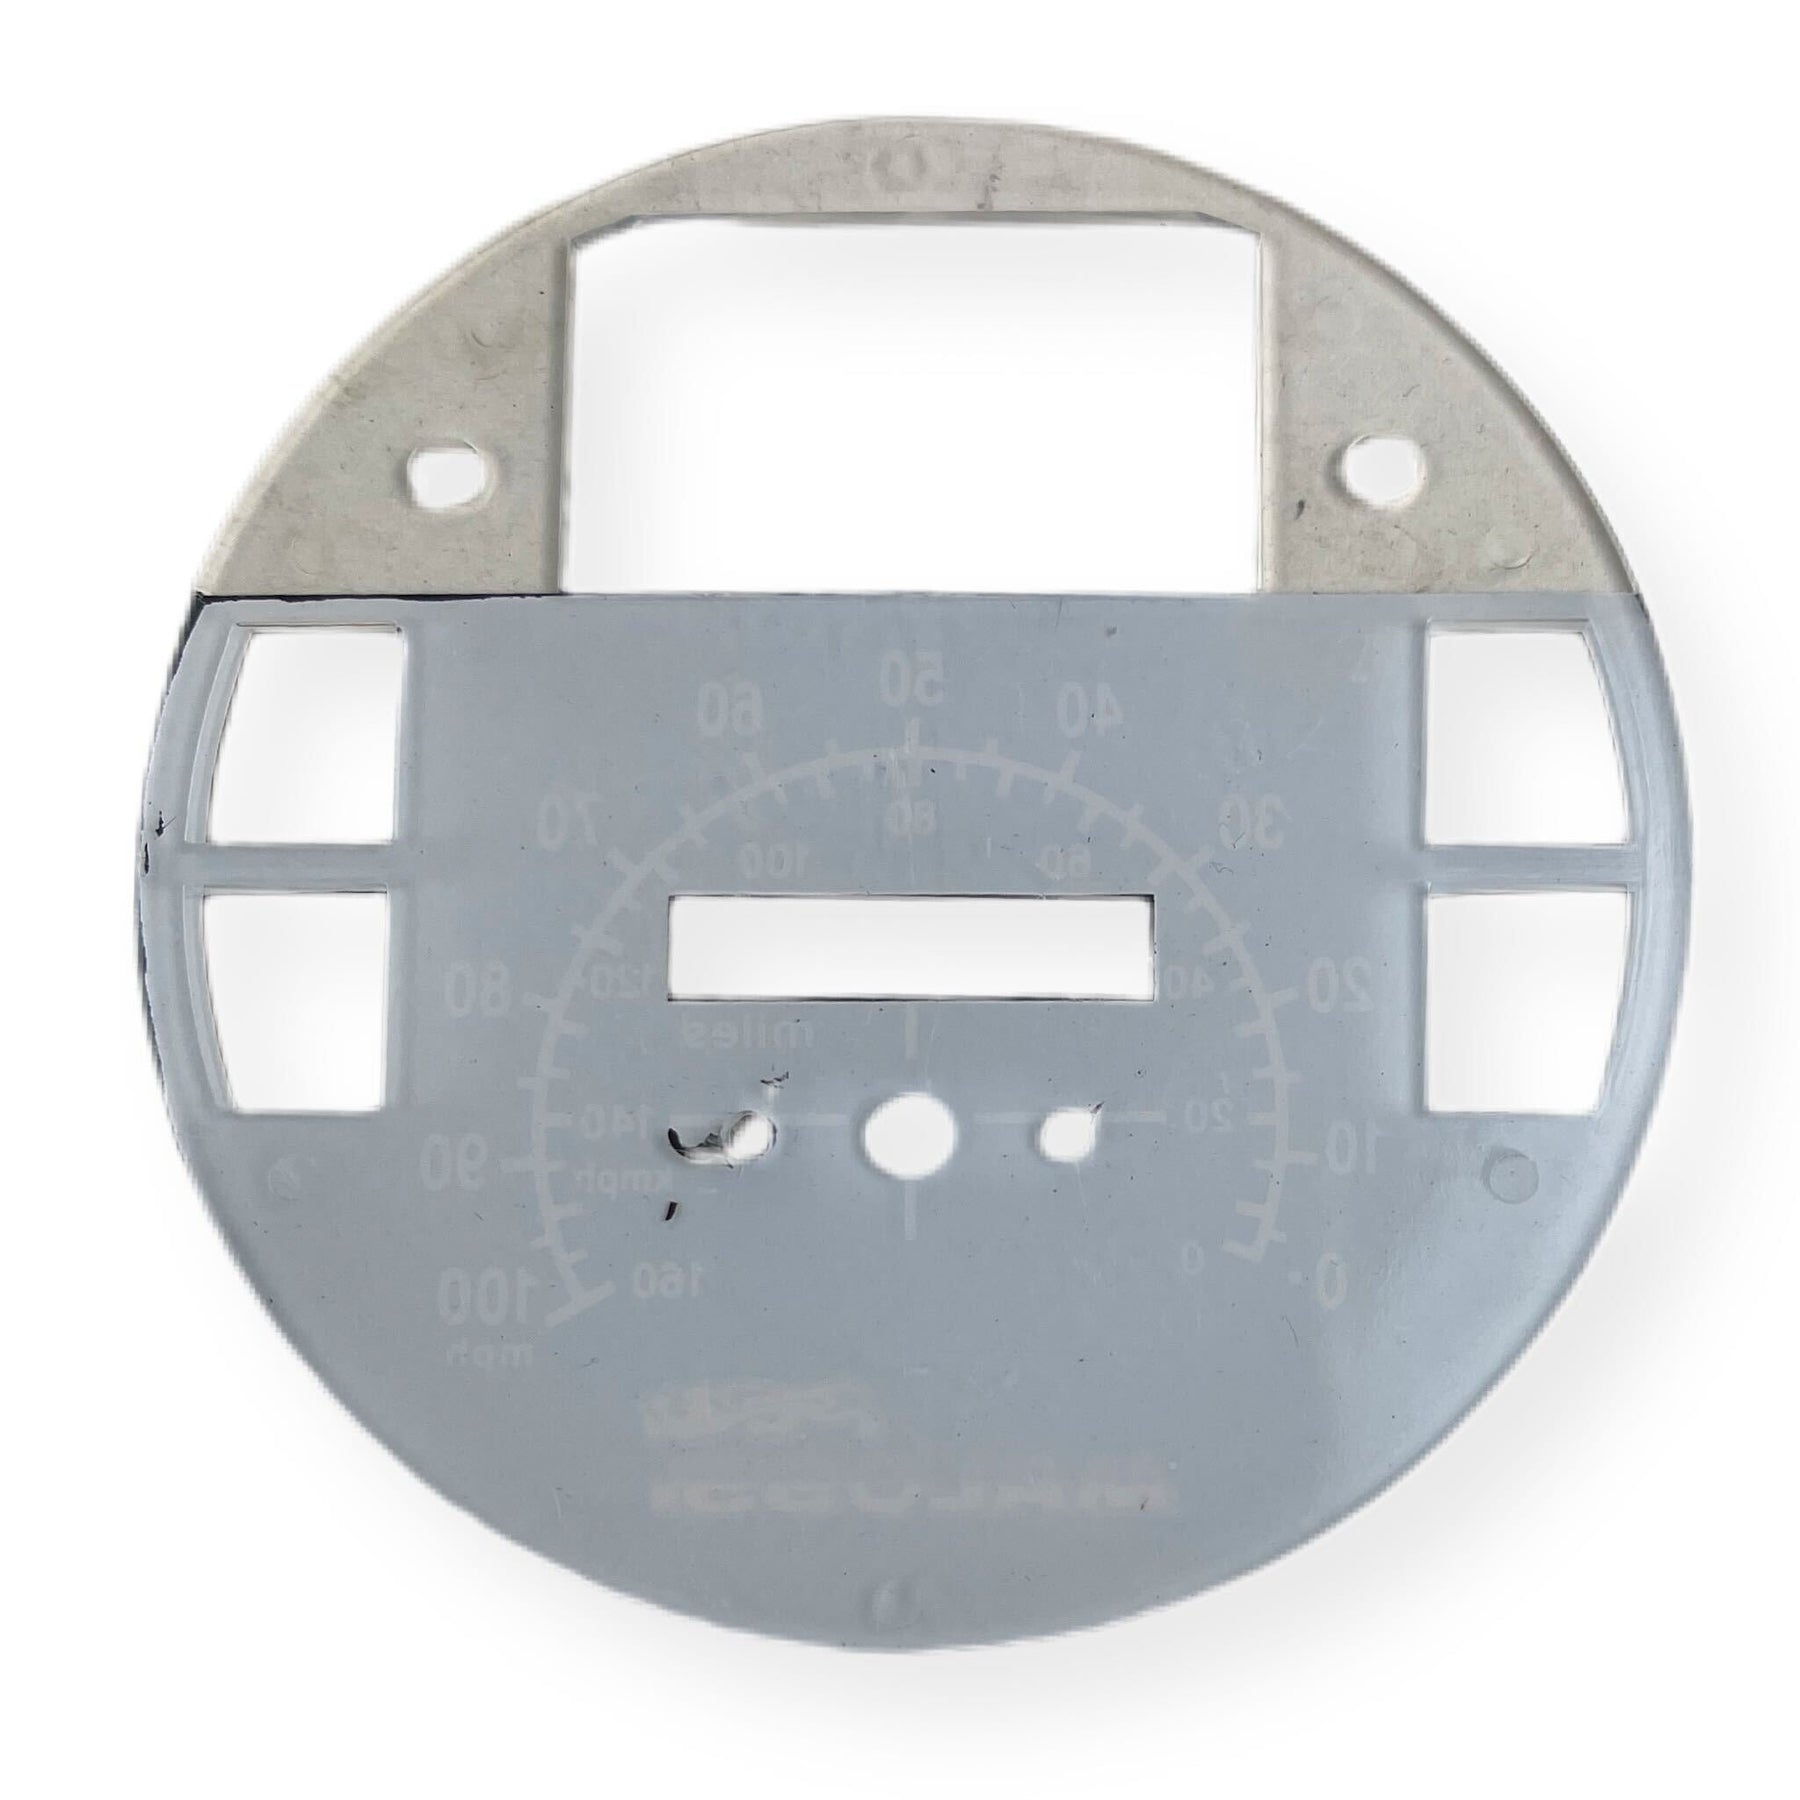 Vespa PX EFL Disc T5 Classic LML Speedometer Lens Repair Kit Black & Pinasco Insert